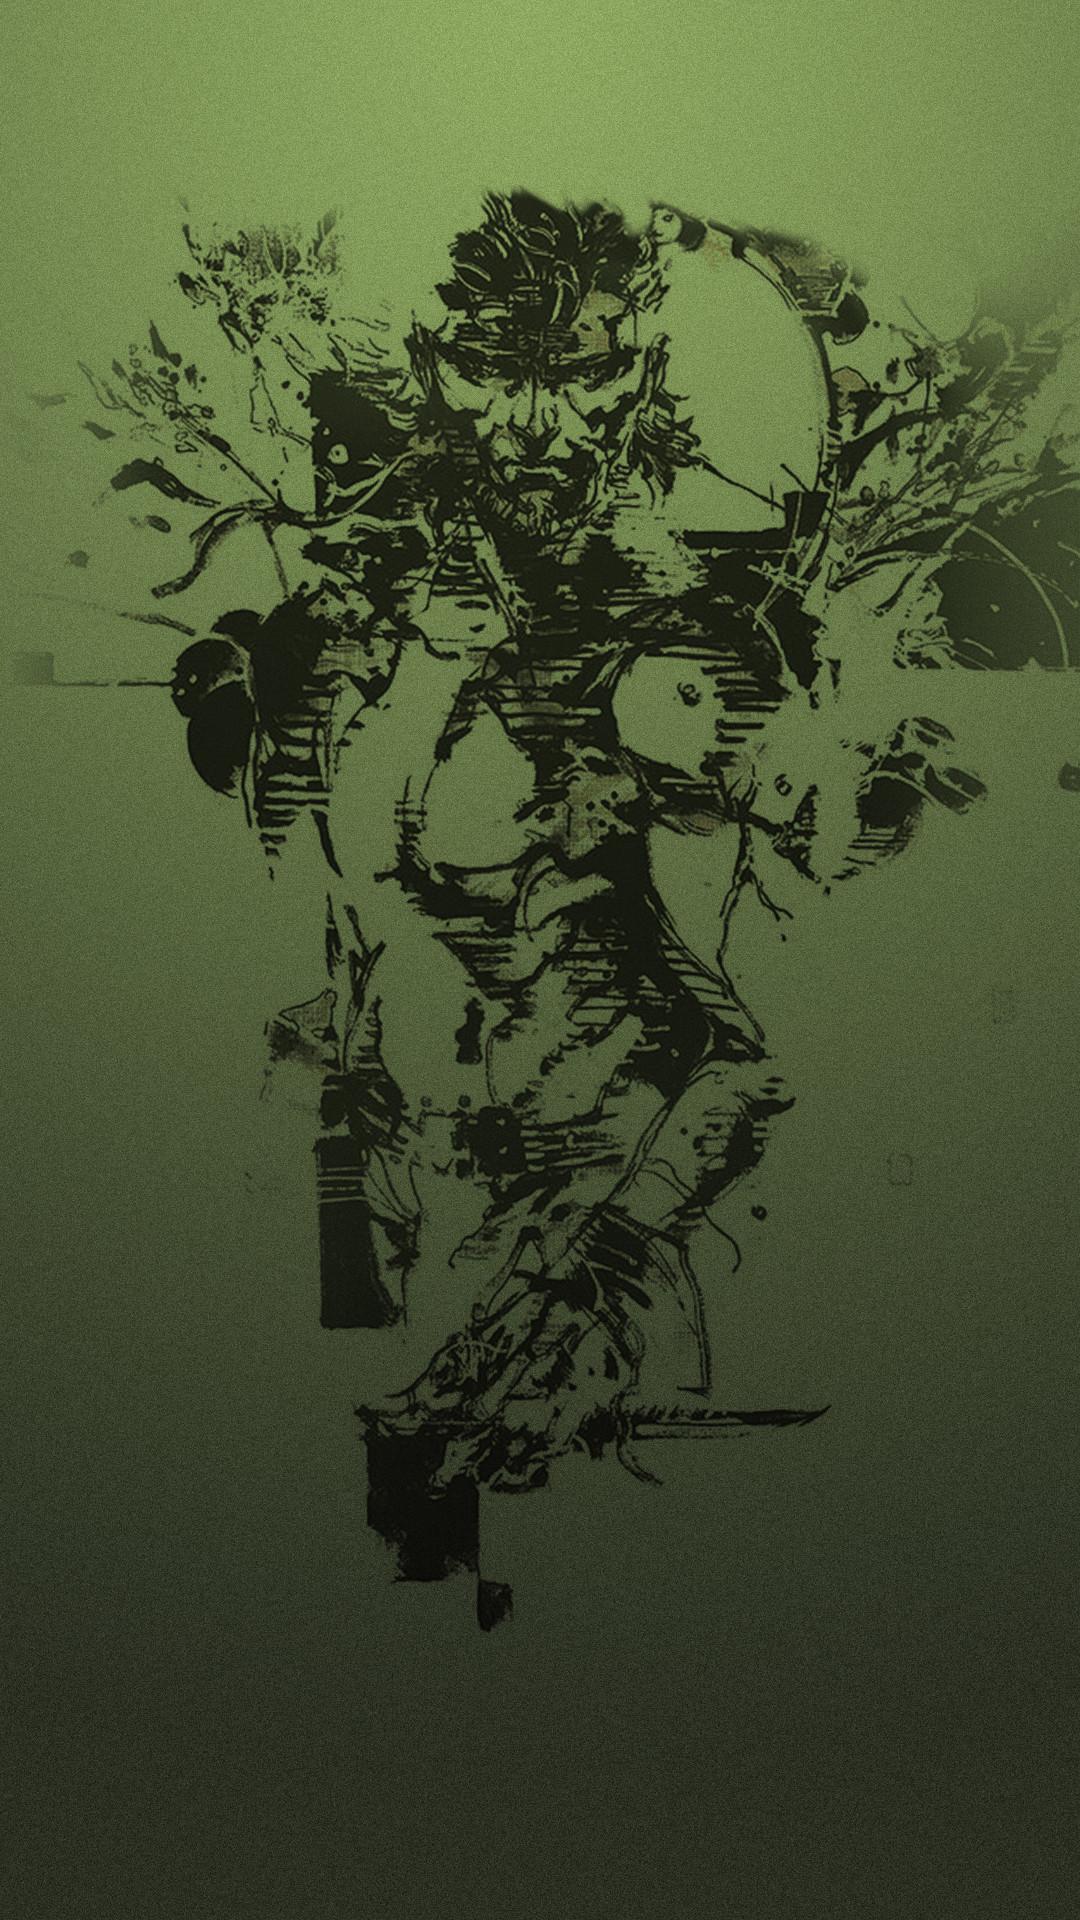 Metal Gear Solid Iphone Wallpapers Top Free Metal Gear Solid Iphone Backgrounds Wallpaperaccess